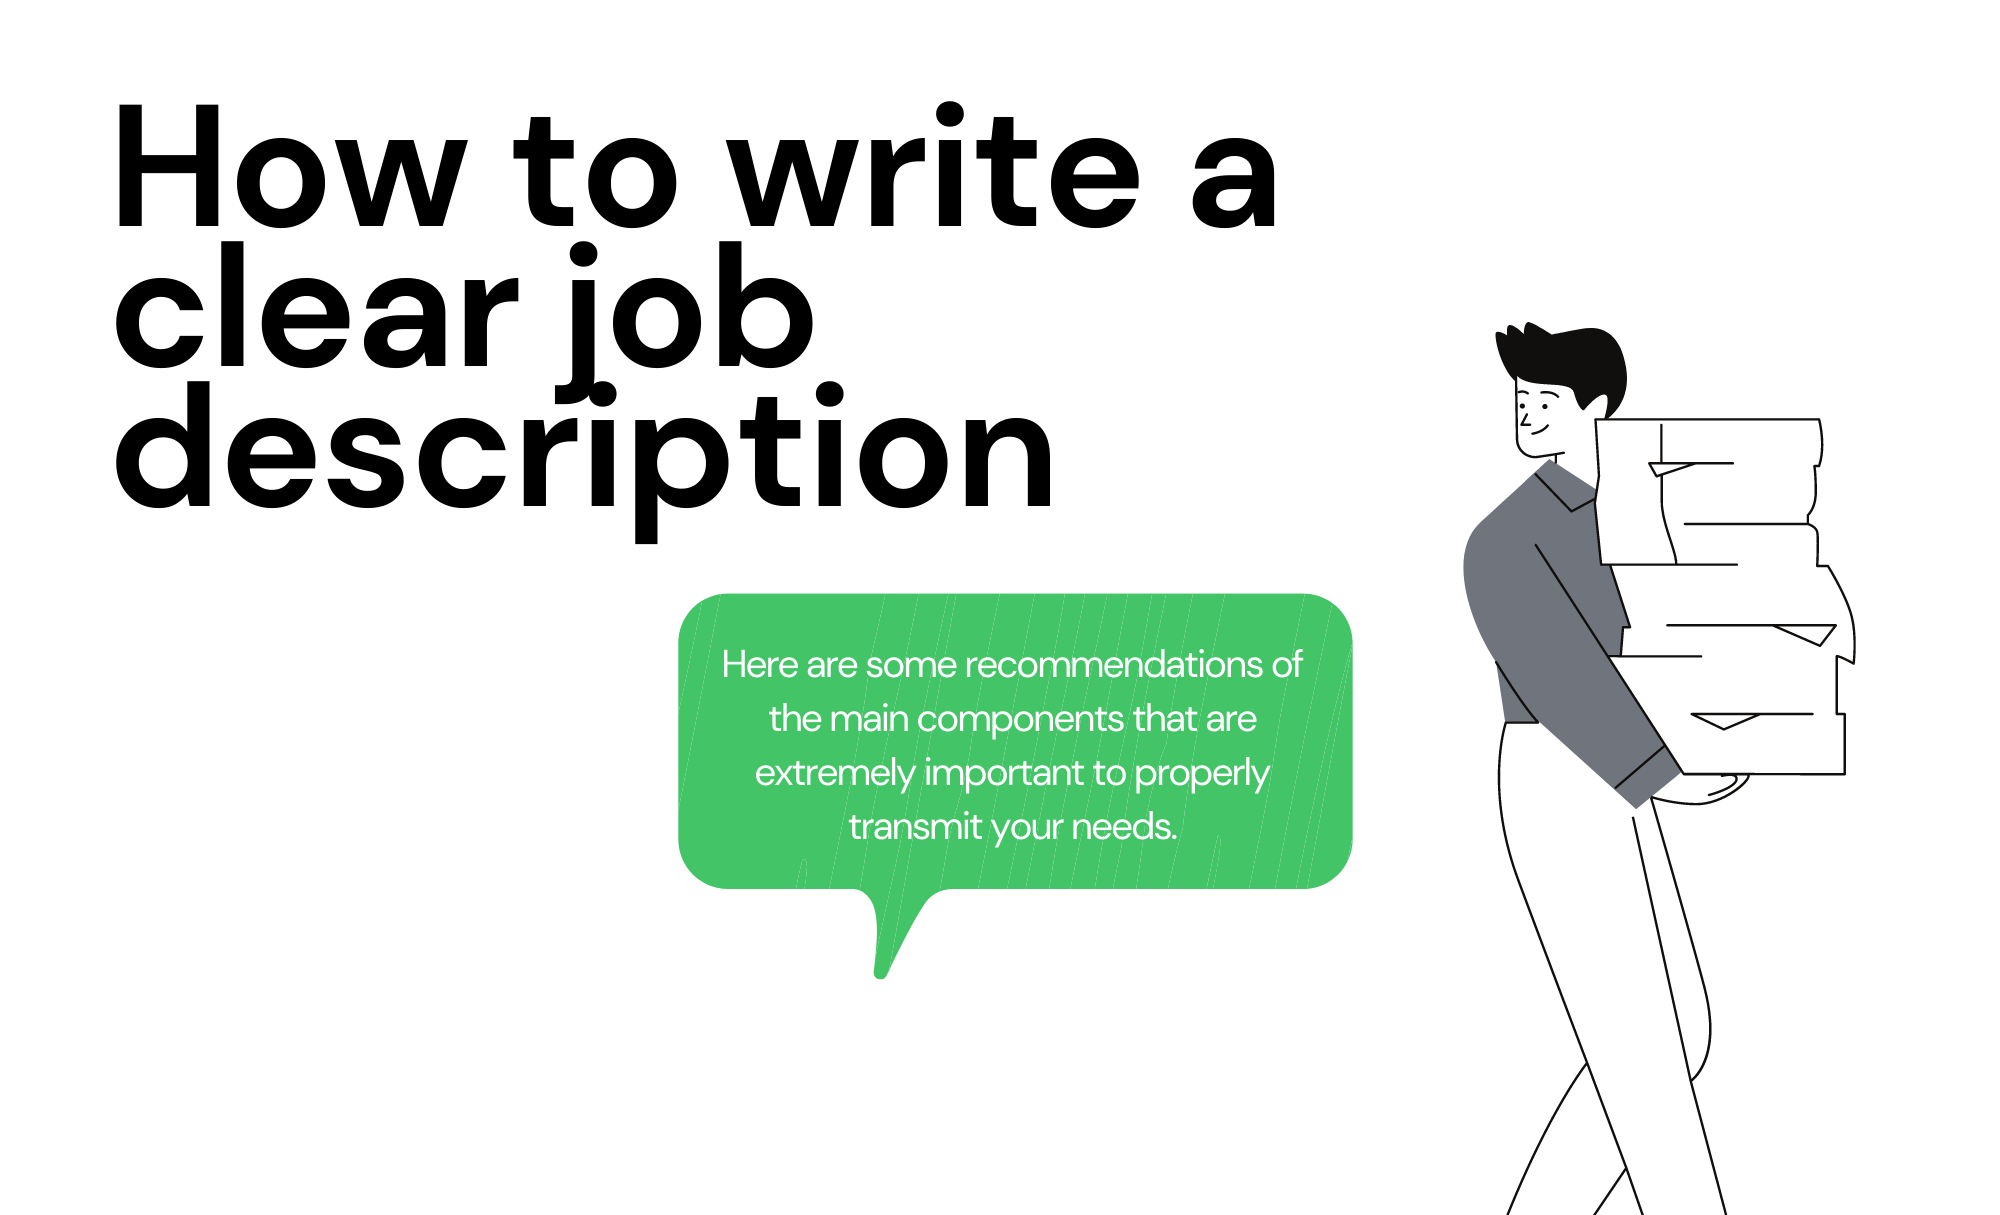 How to write a clear job description